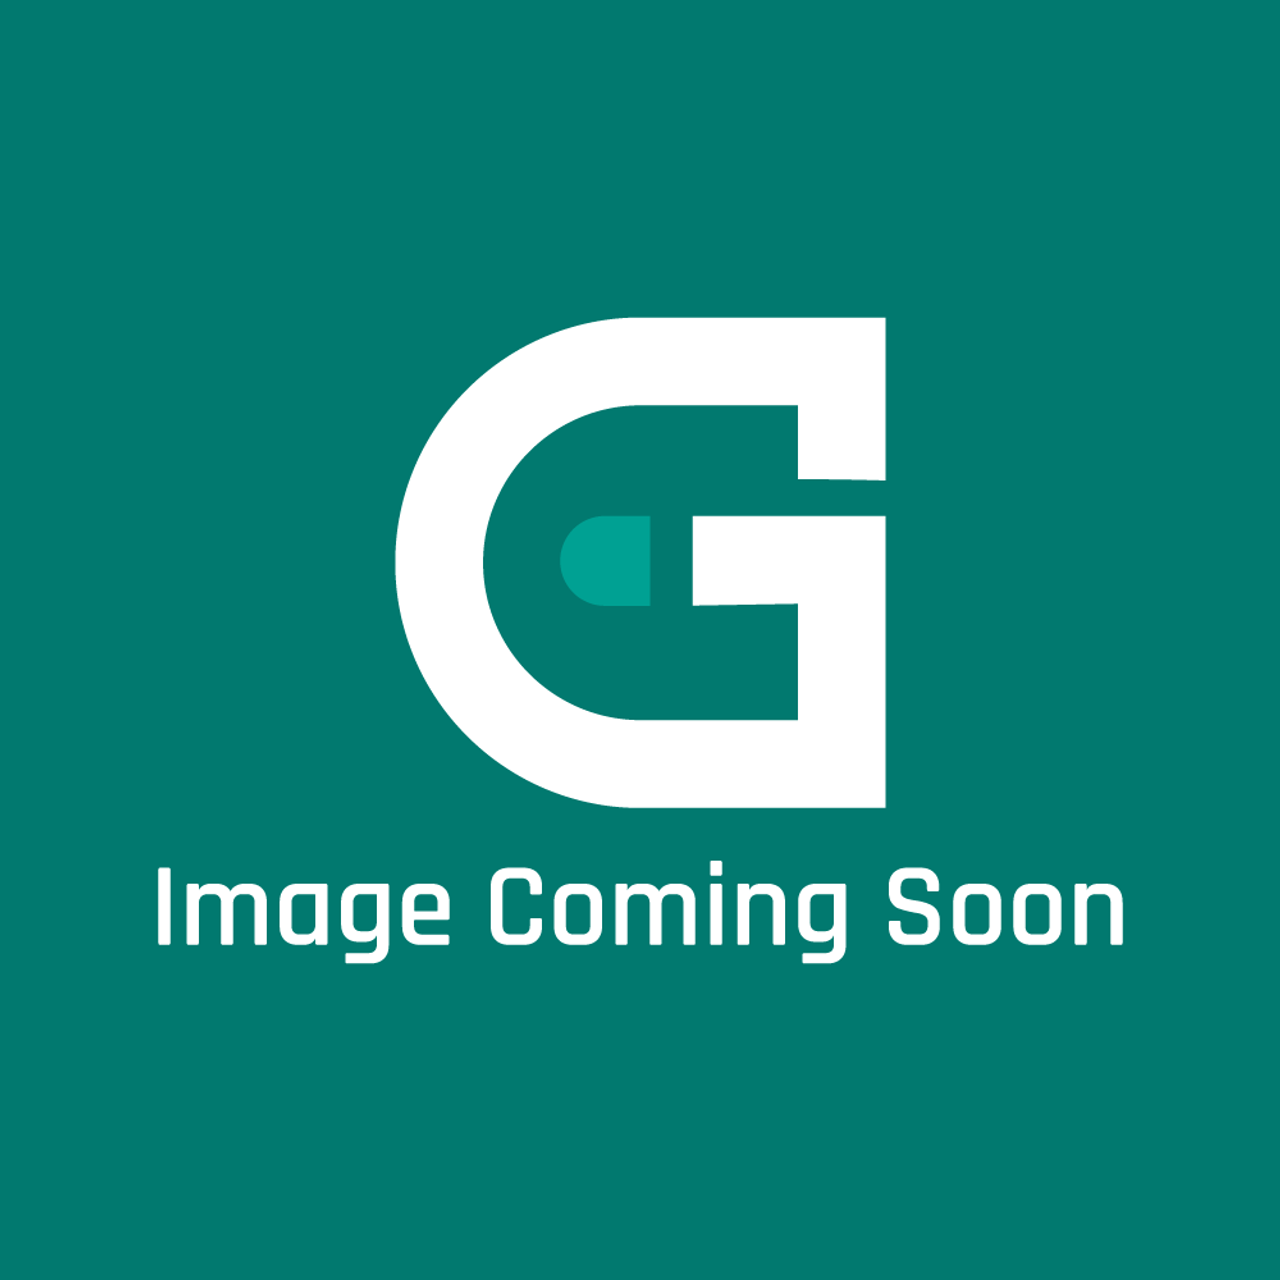 GE Appliances WB07K10420 - Vent Trim - Image Coming Soon!